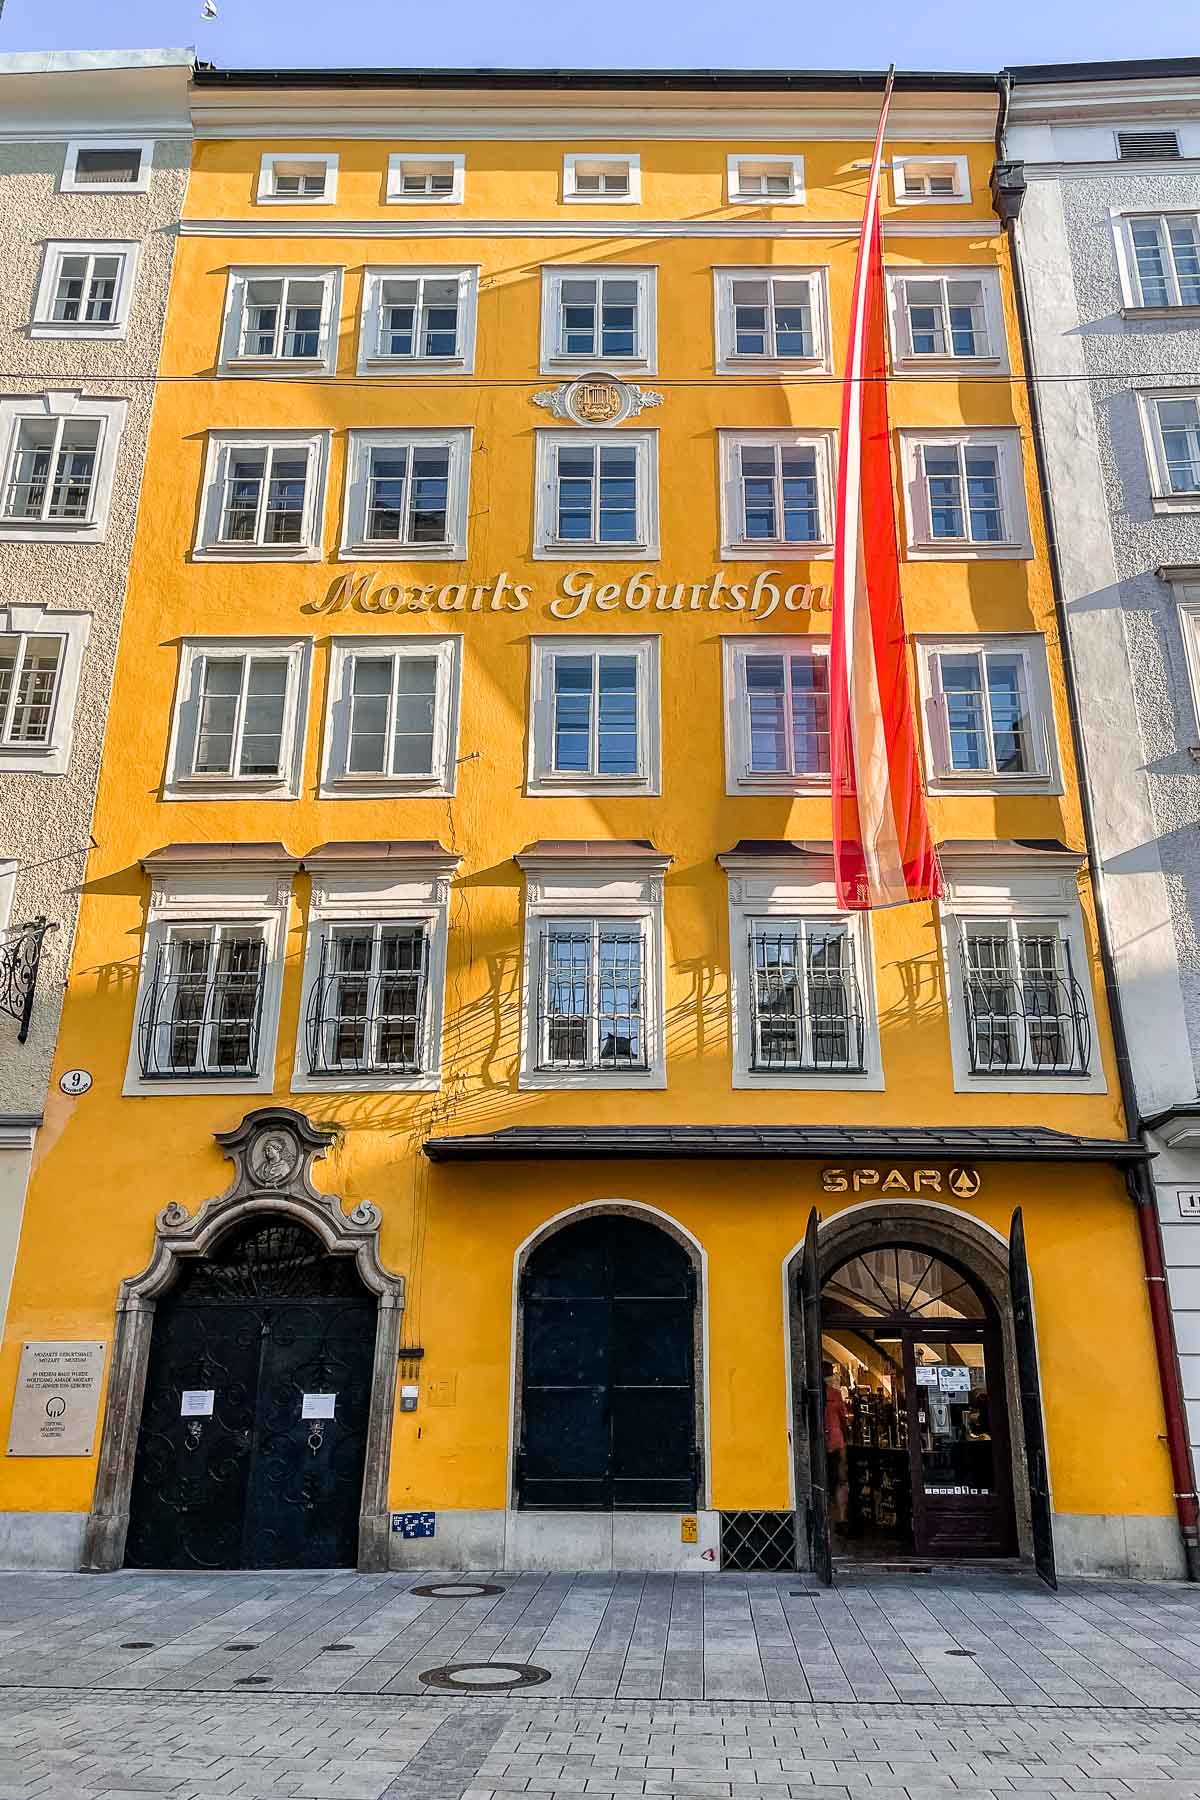 Mozart's Birthplace in Salzburg